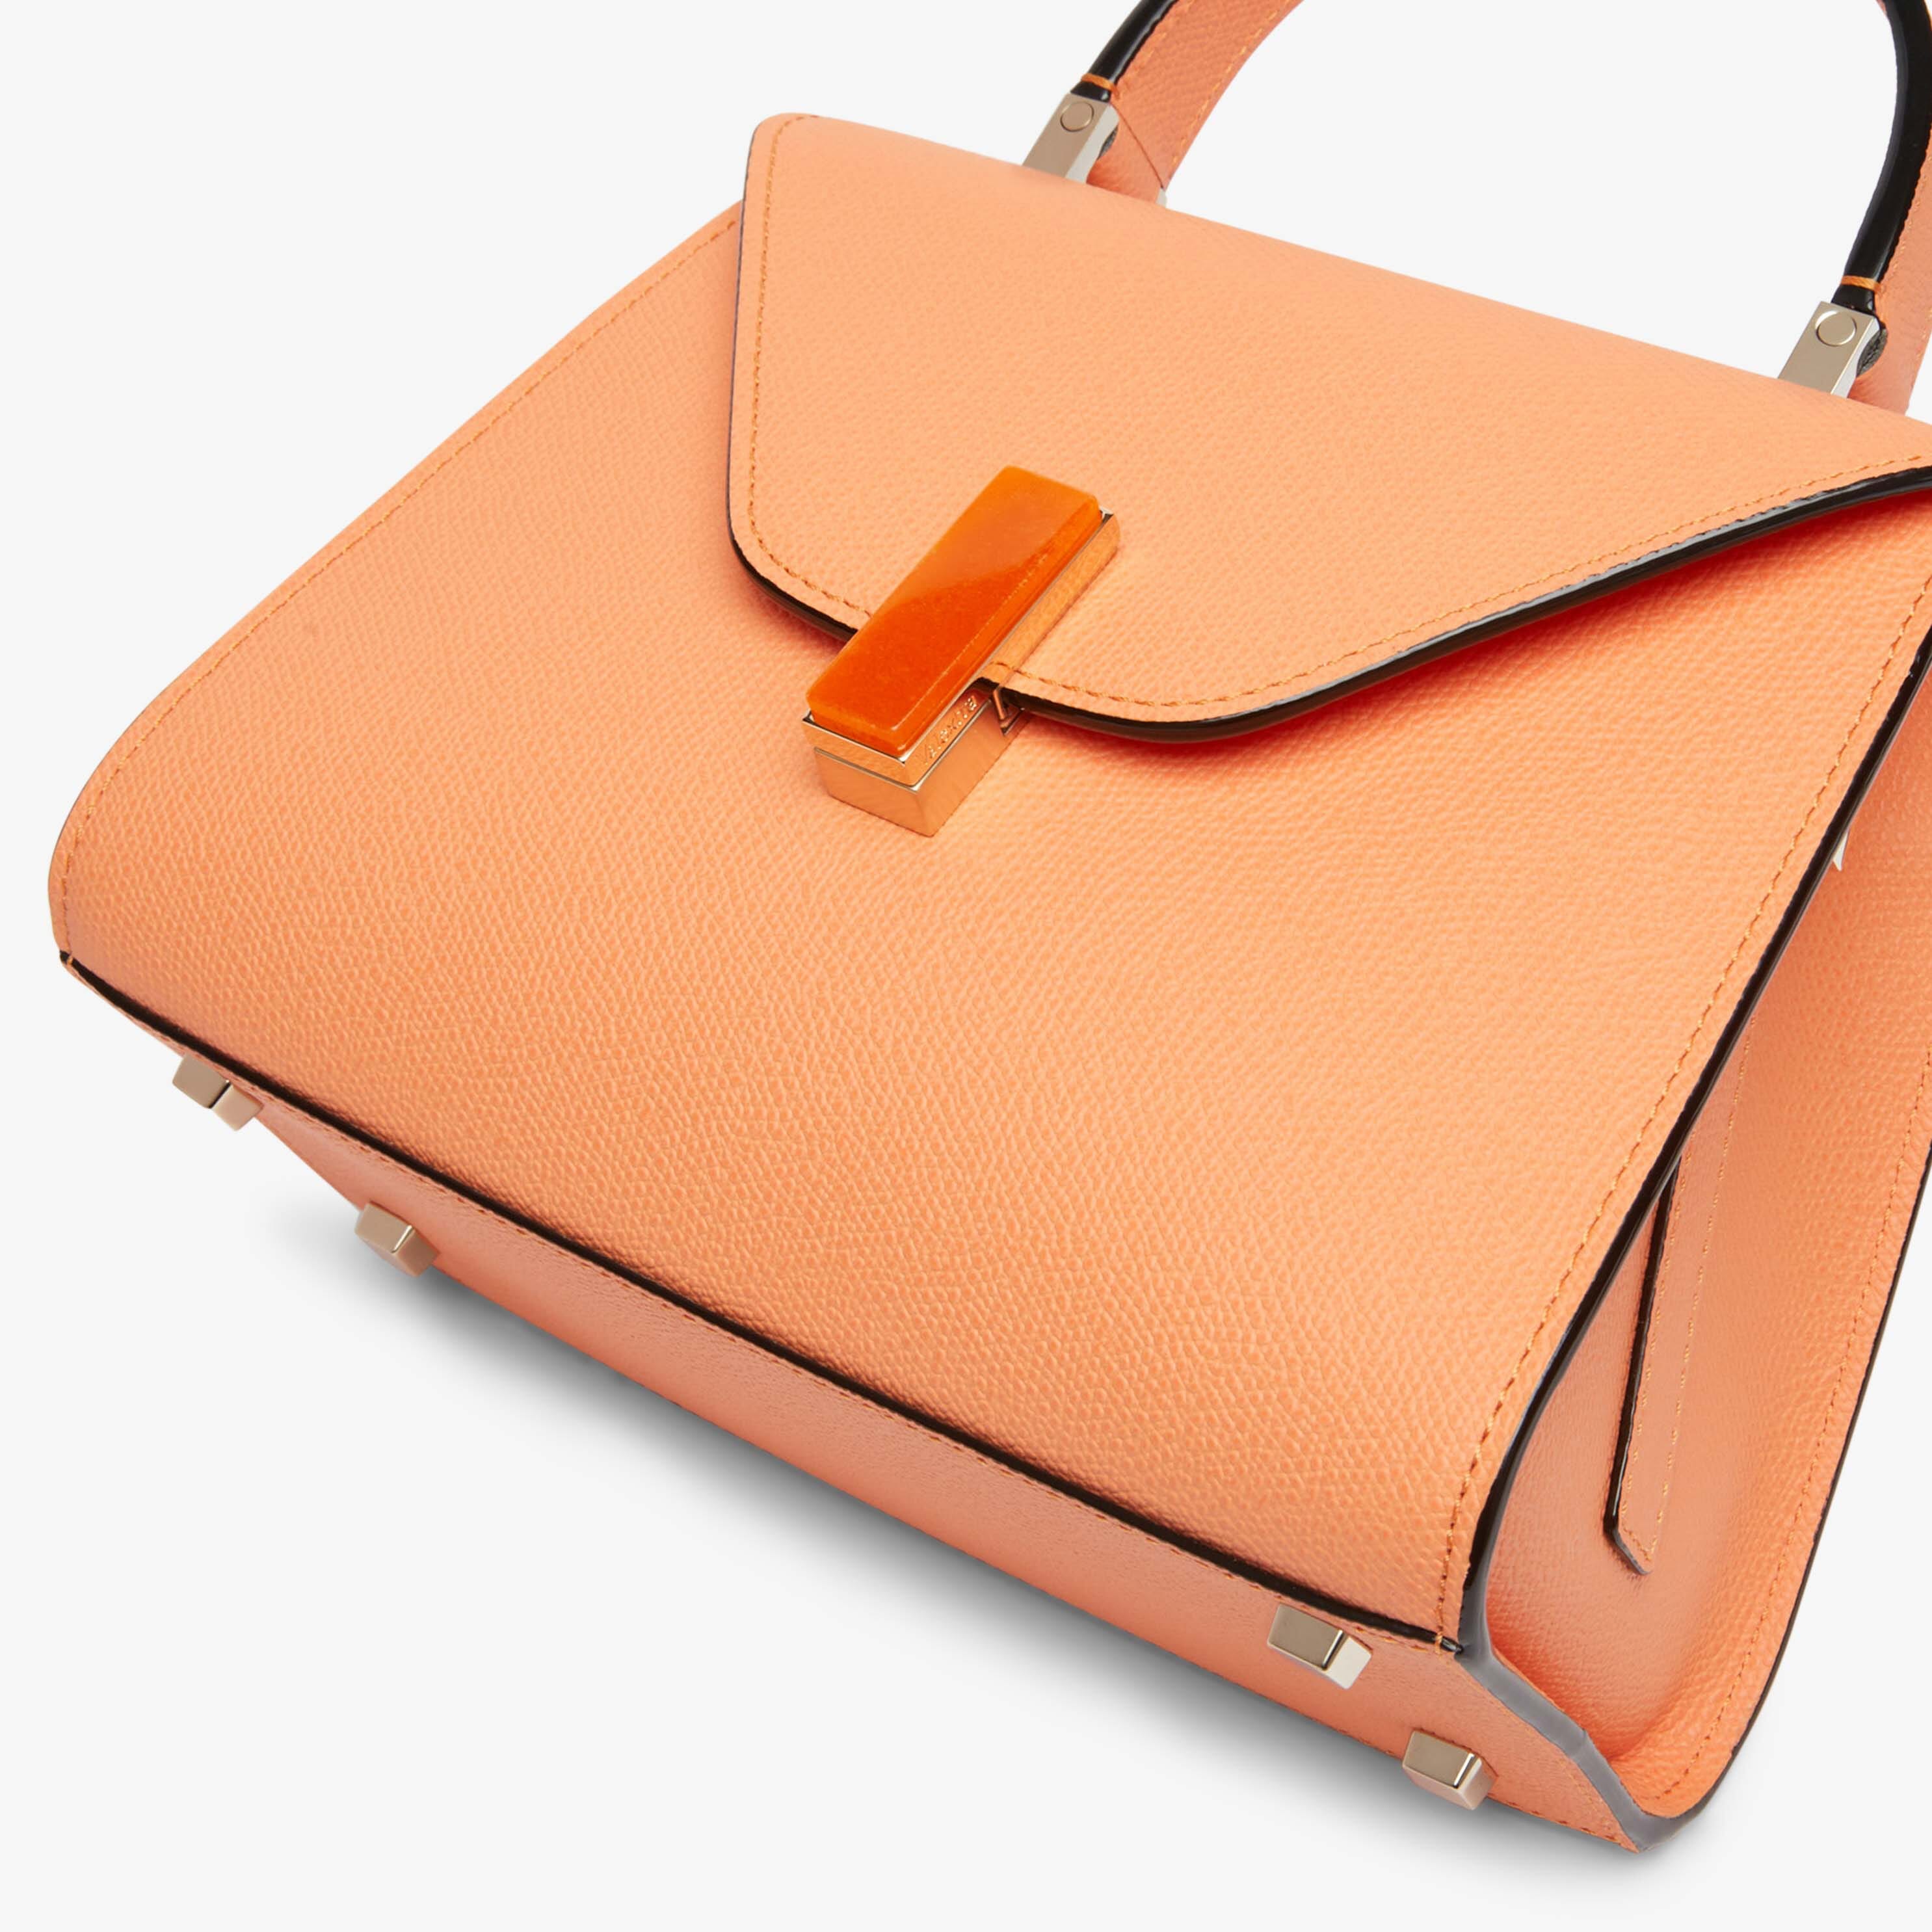 Iside Quarzo Top Handle Mini Bag - Peach Orange/Orange - Vitello VS - Valextra - 4